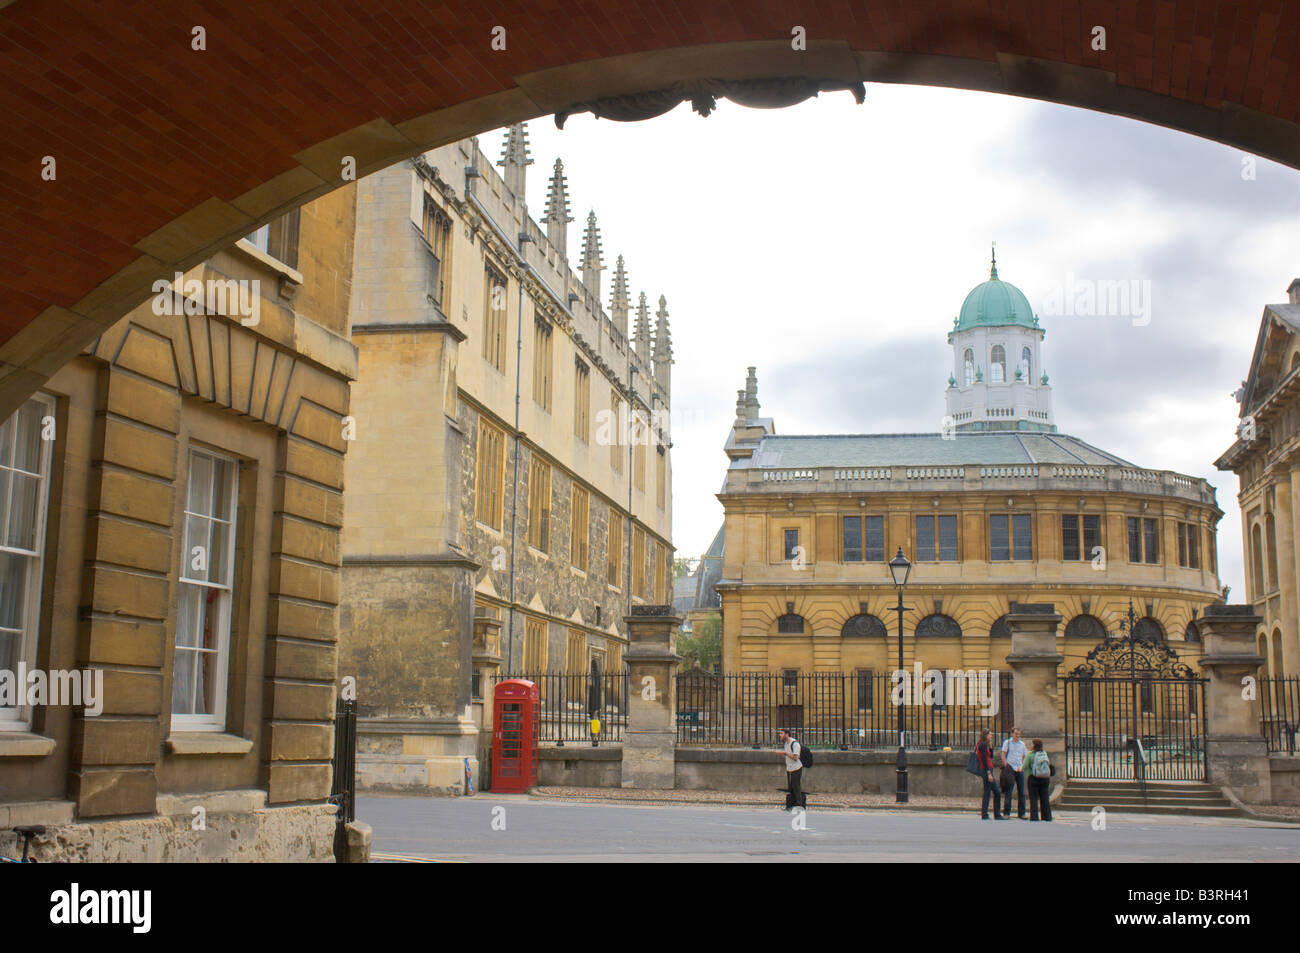 Sheldonian theatre, university of Oxford, England. Stock Photo